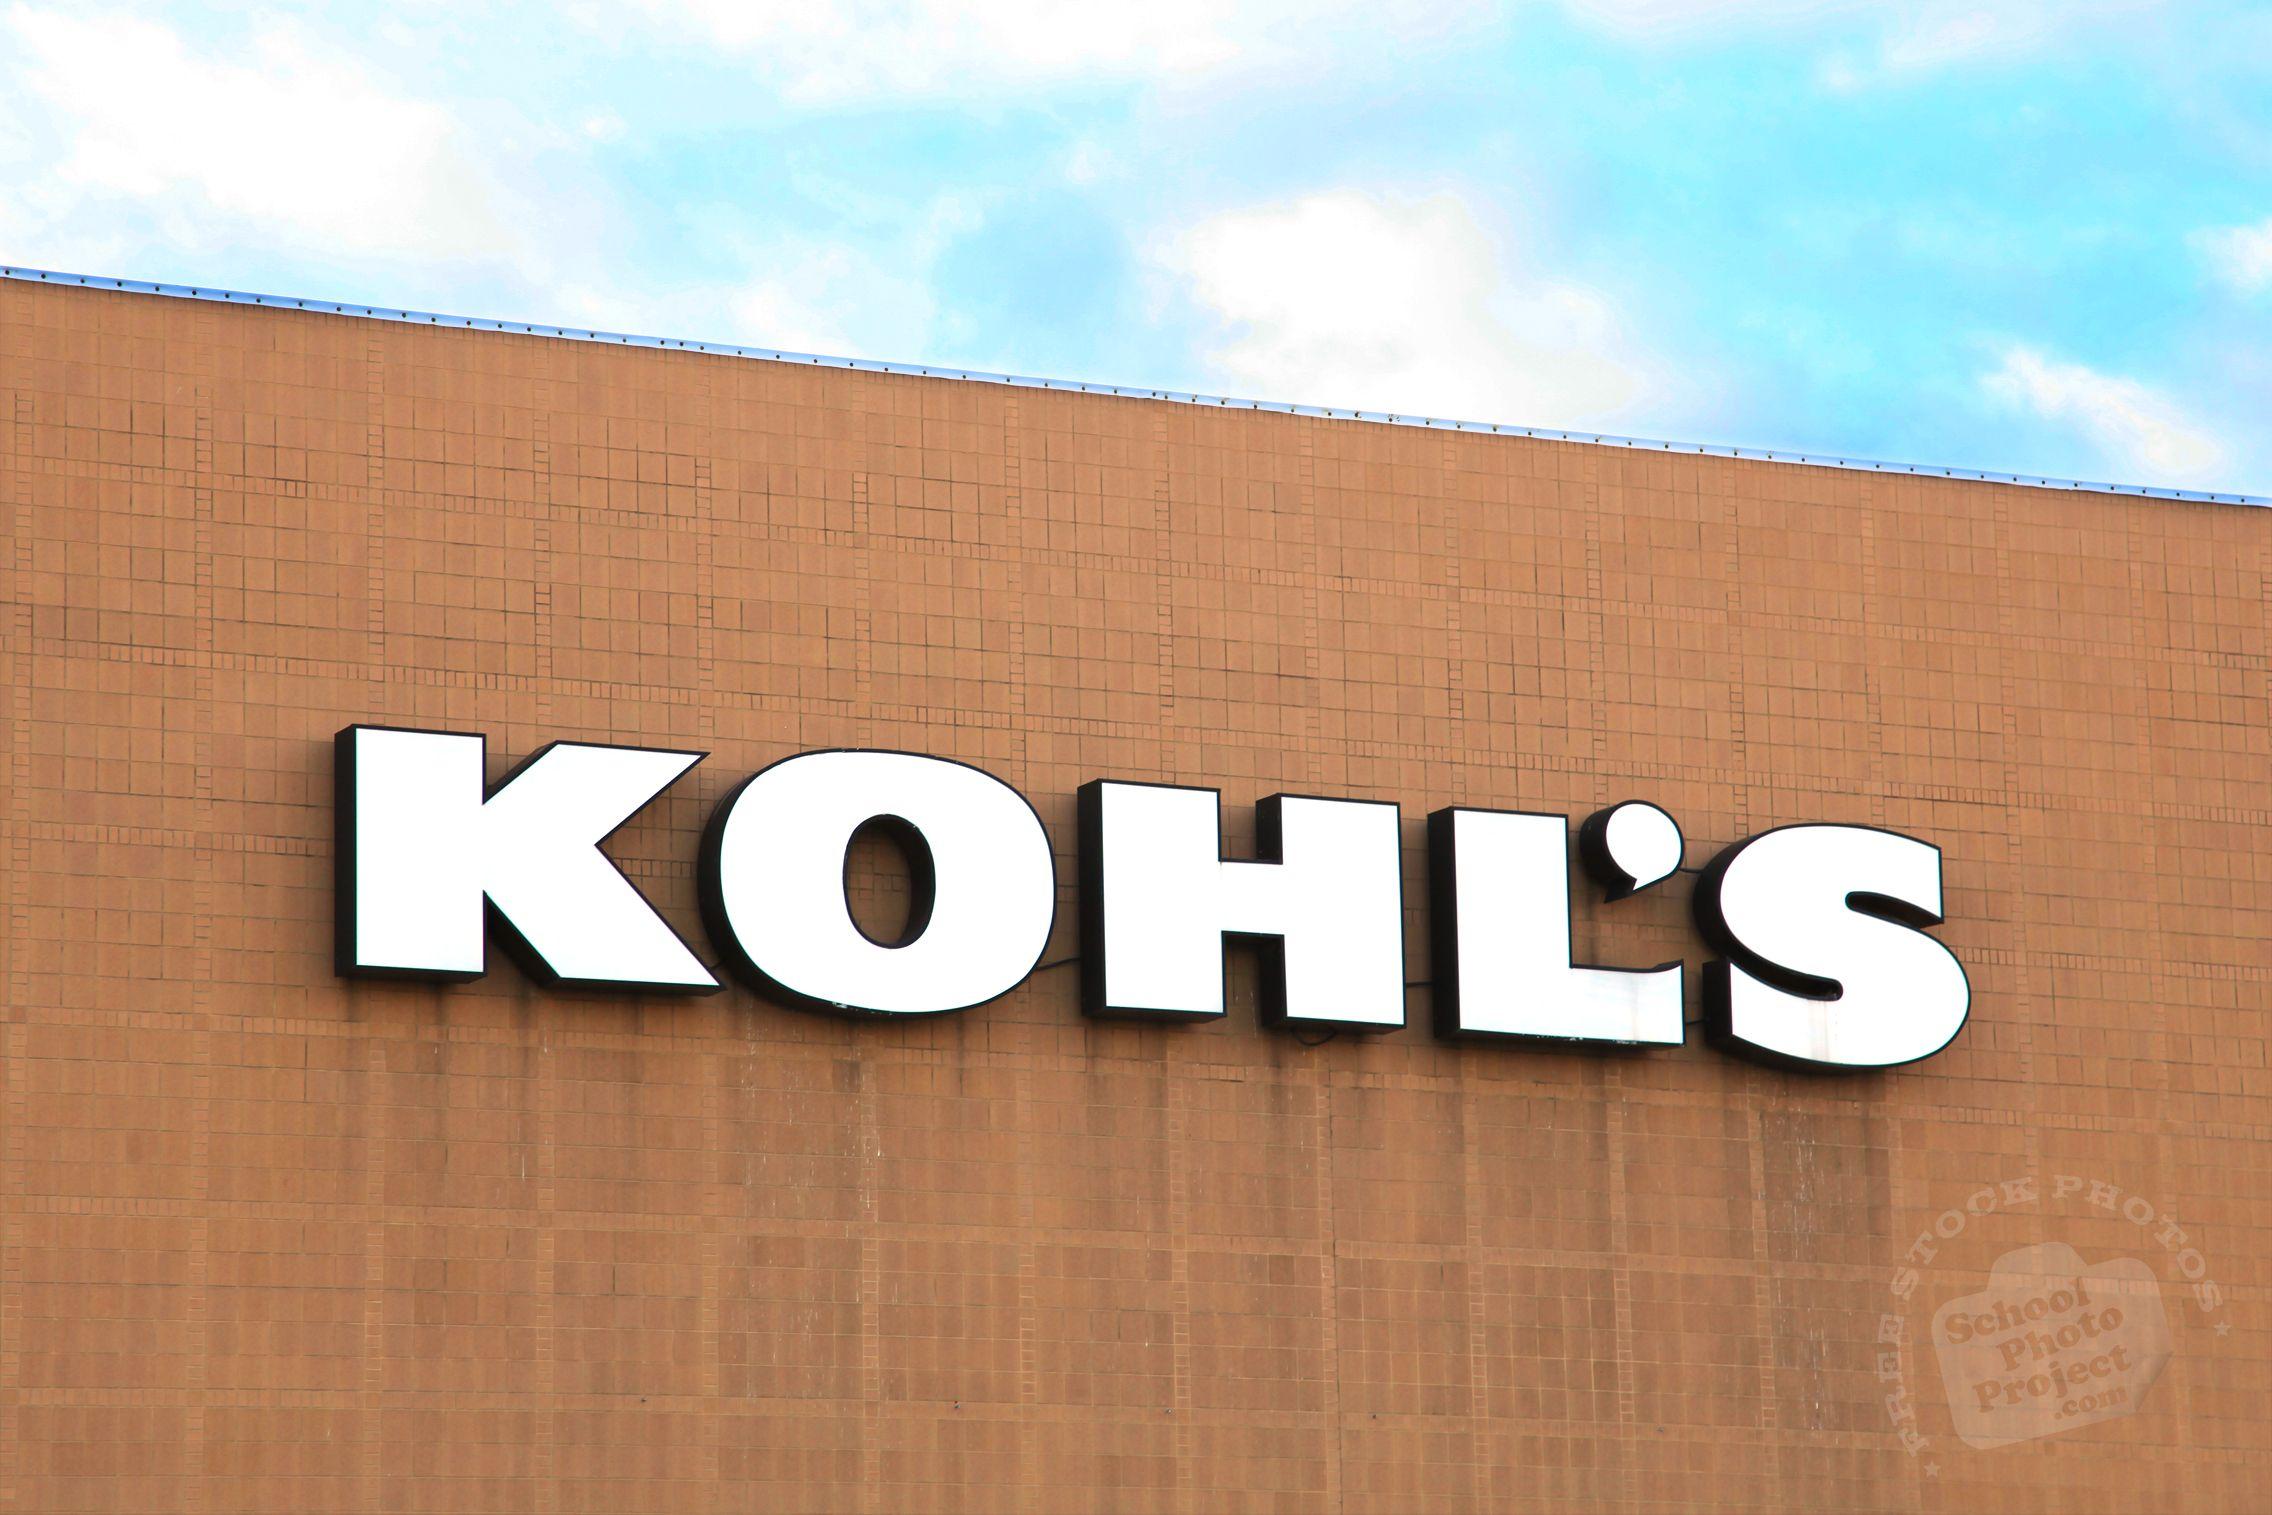 Popular Retail Store Logo - FREE KOHL'S Logo, KOHL'S Identity, Popular Company's Brand Image